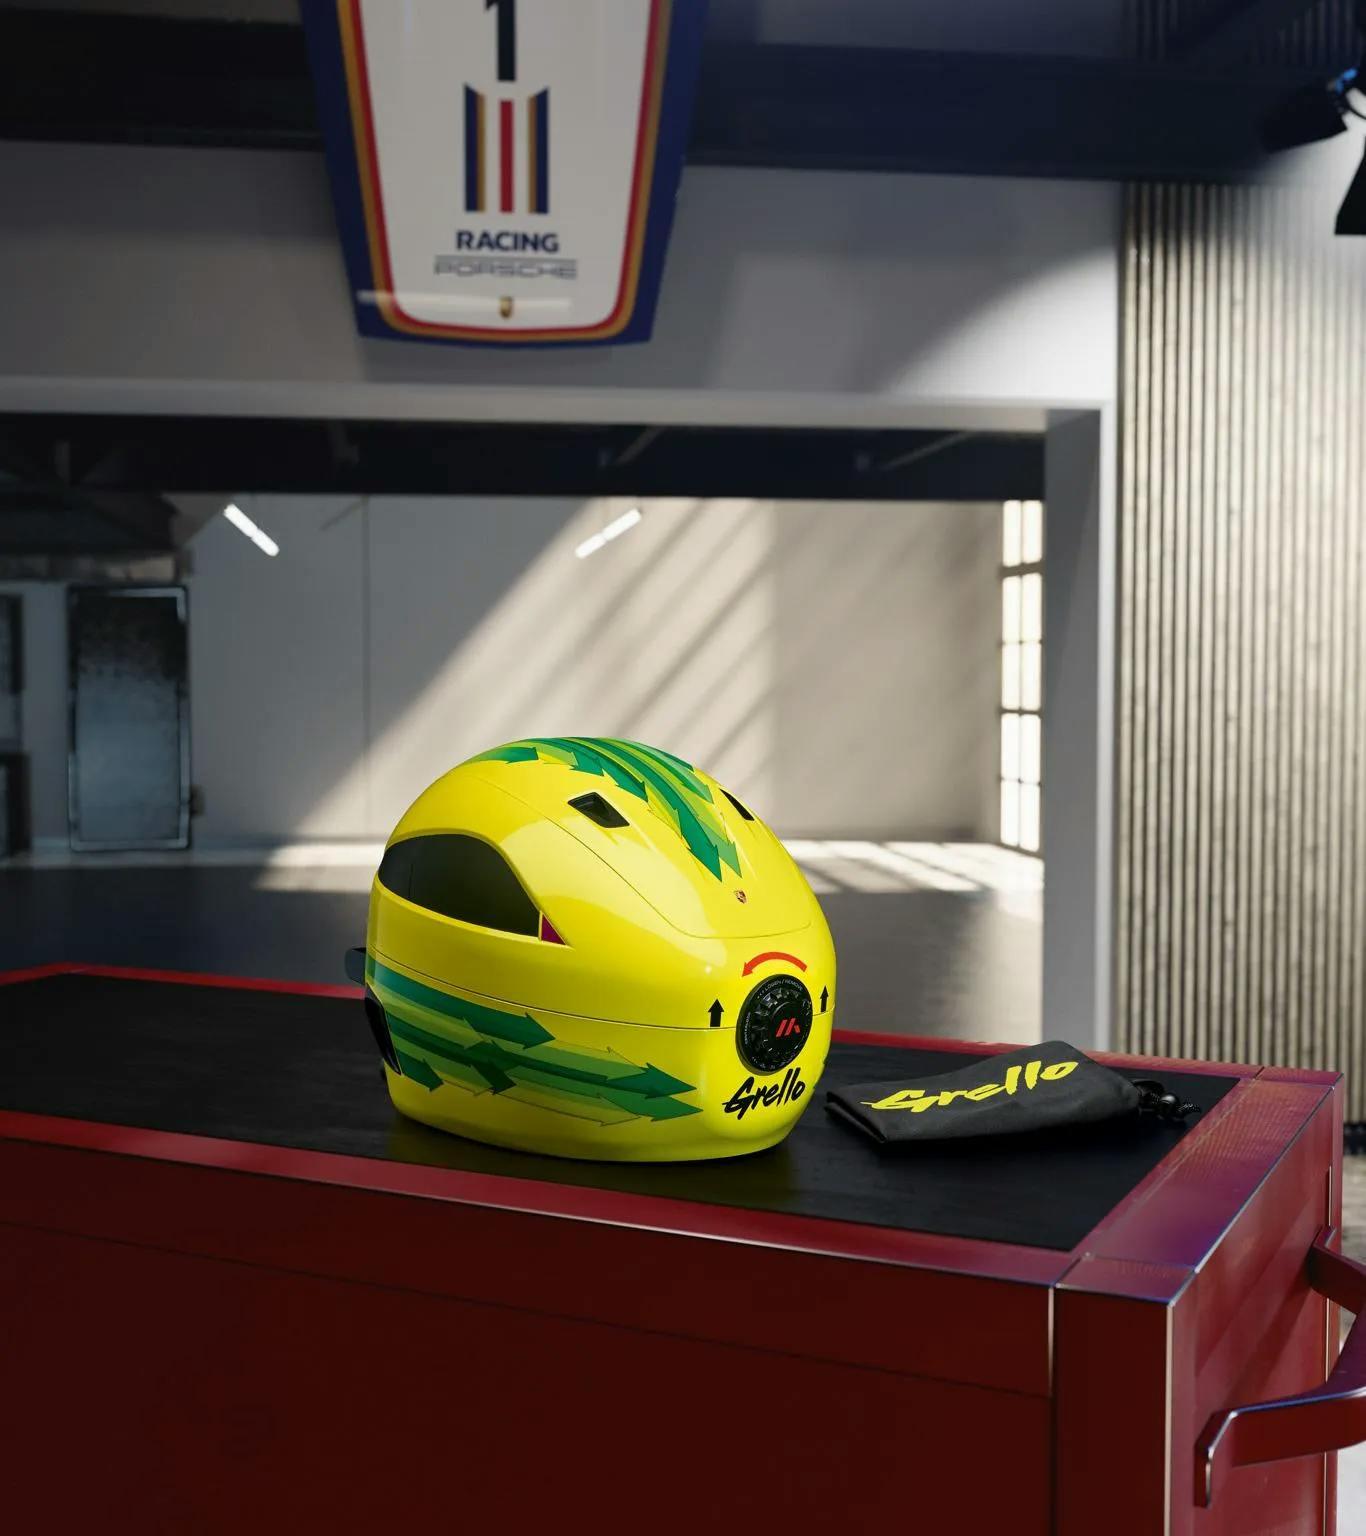 Helmet case in "Grello" design 3